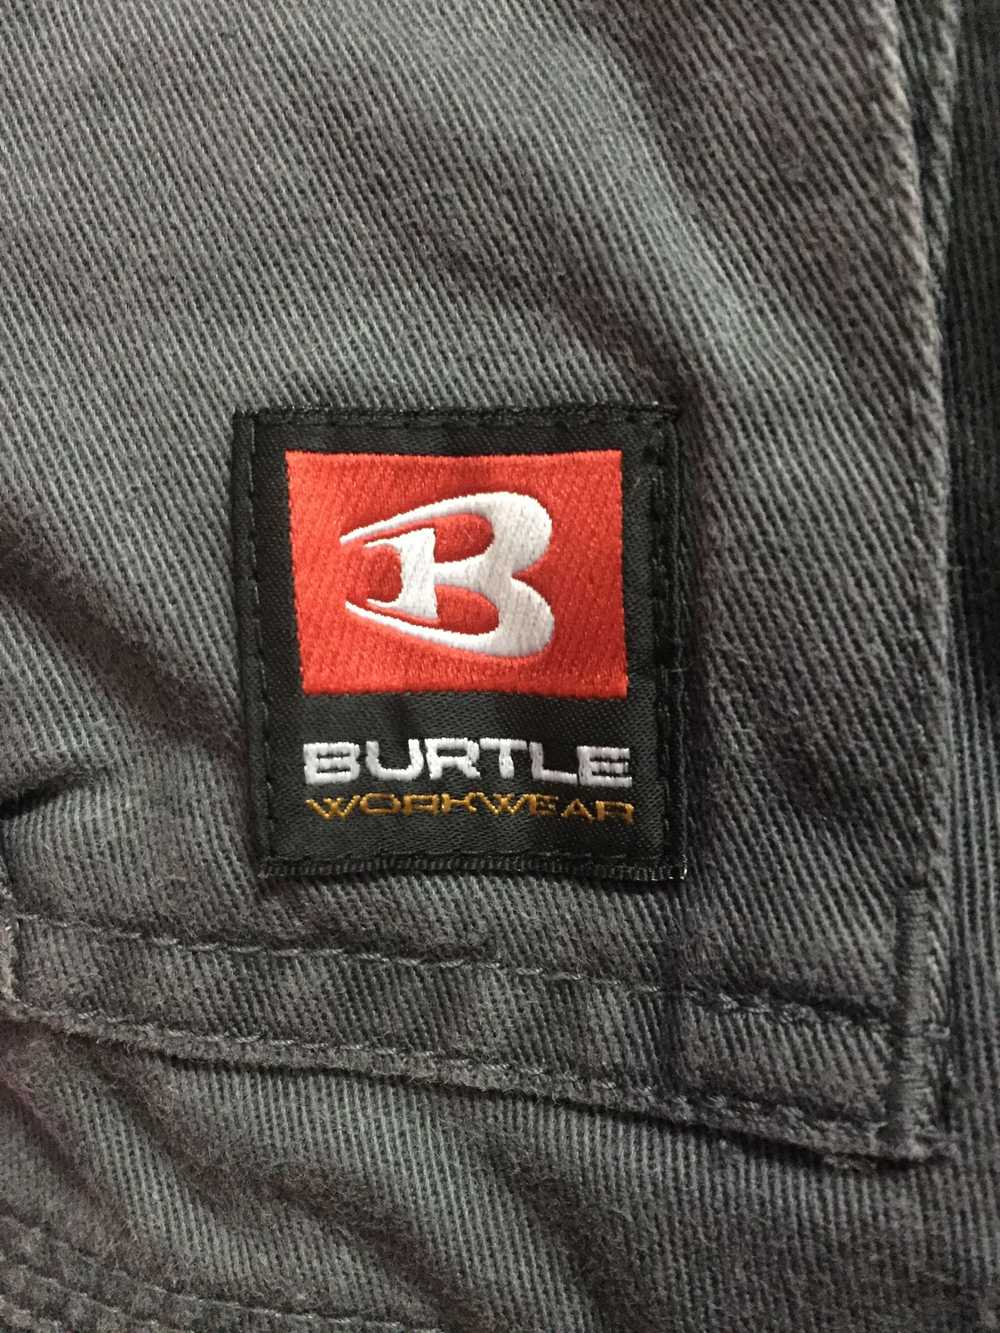 Japanese Brand Burtle Workwear Cargo Pants - image 3